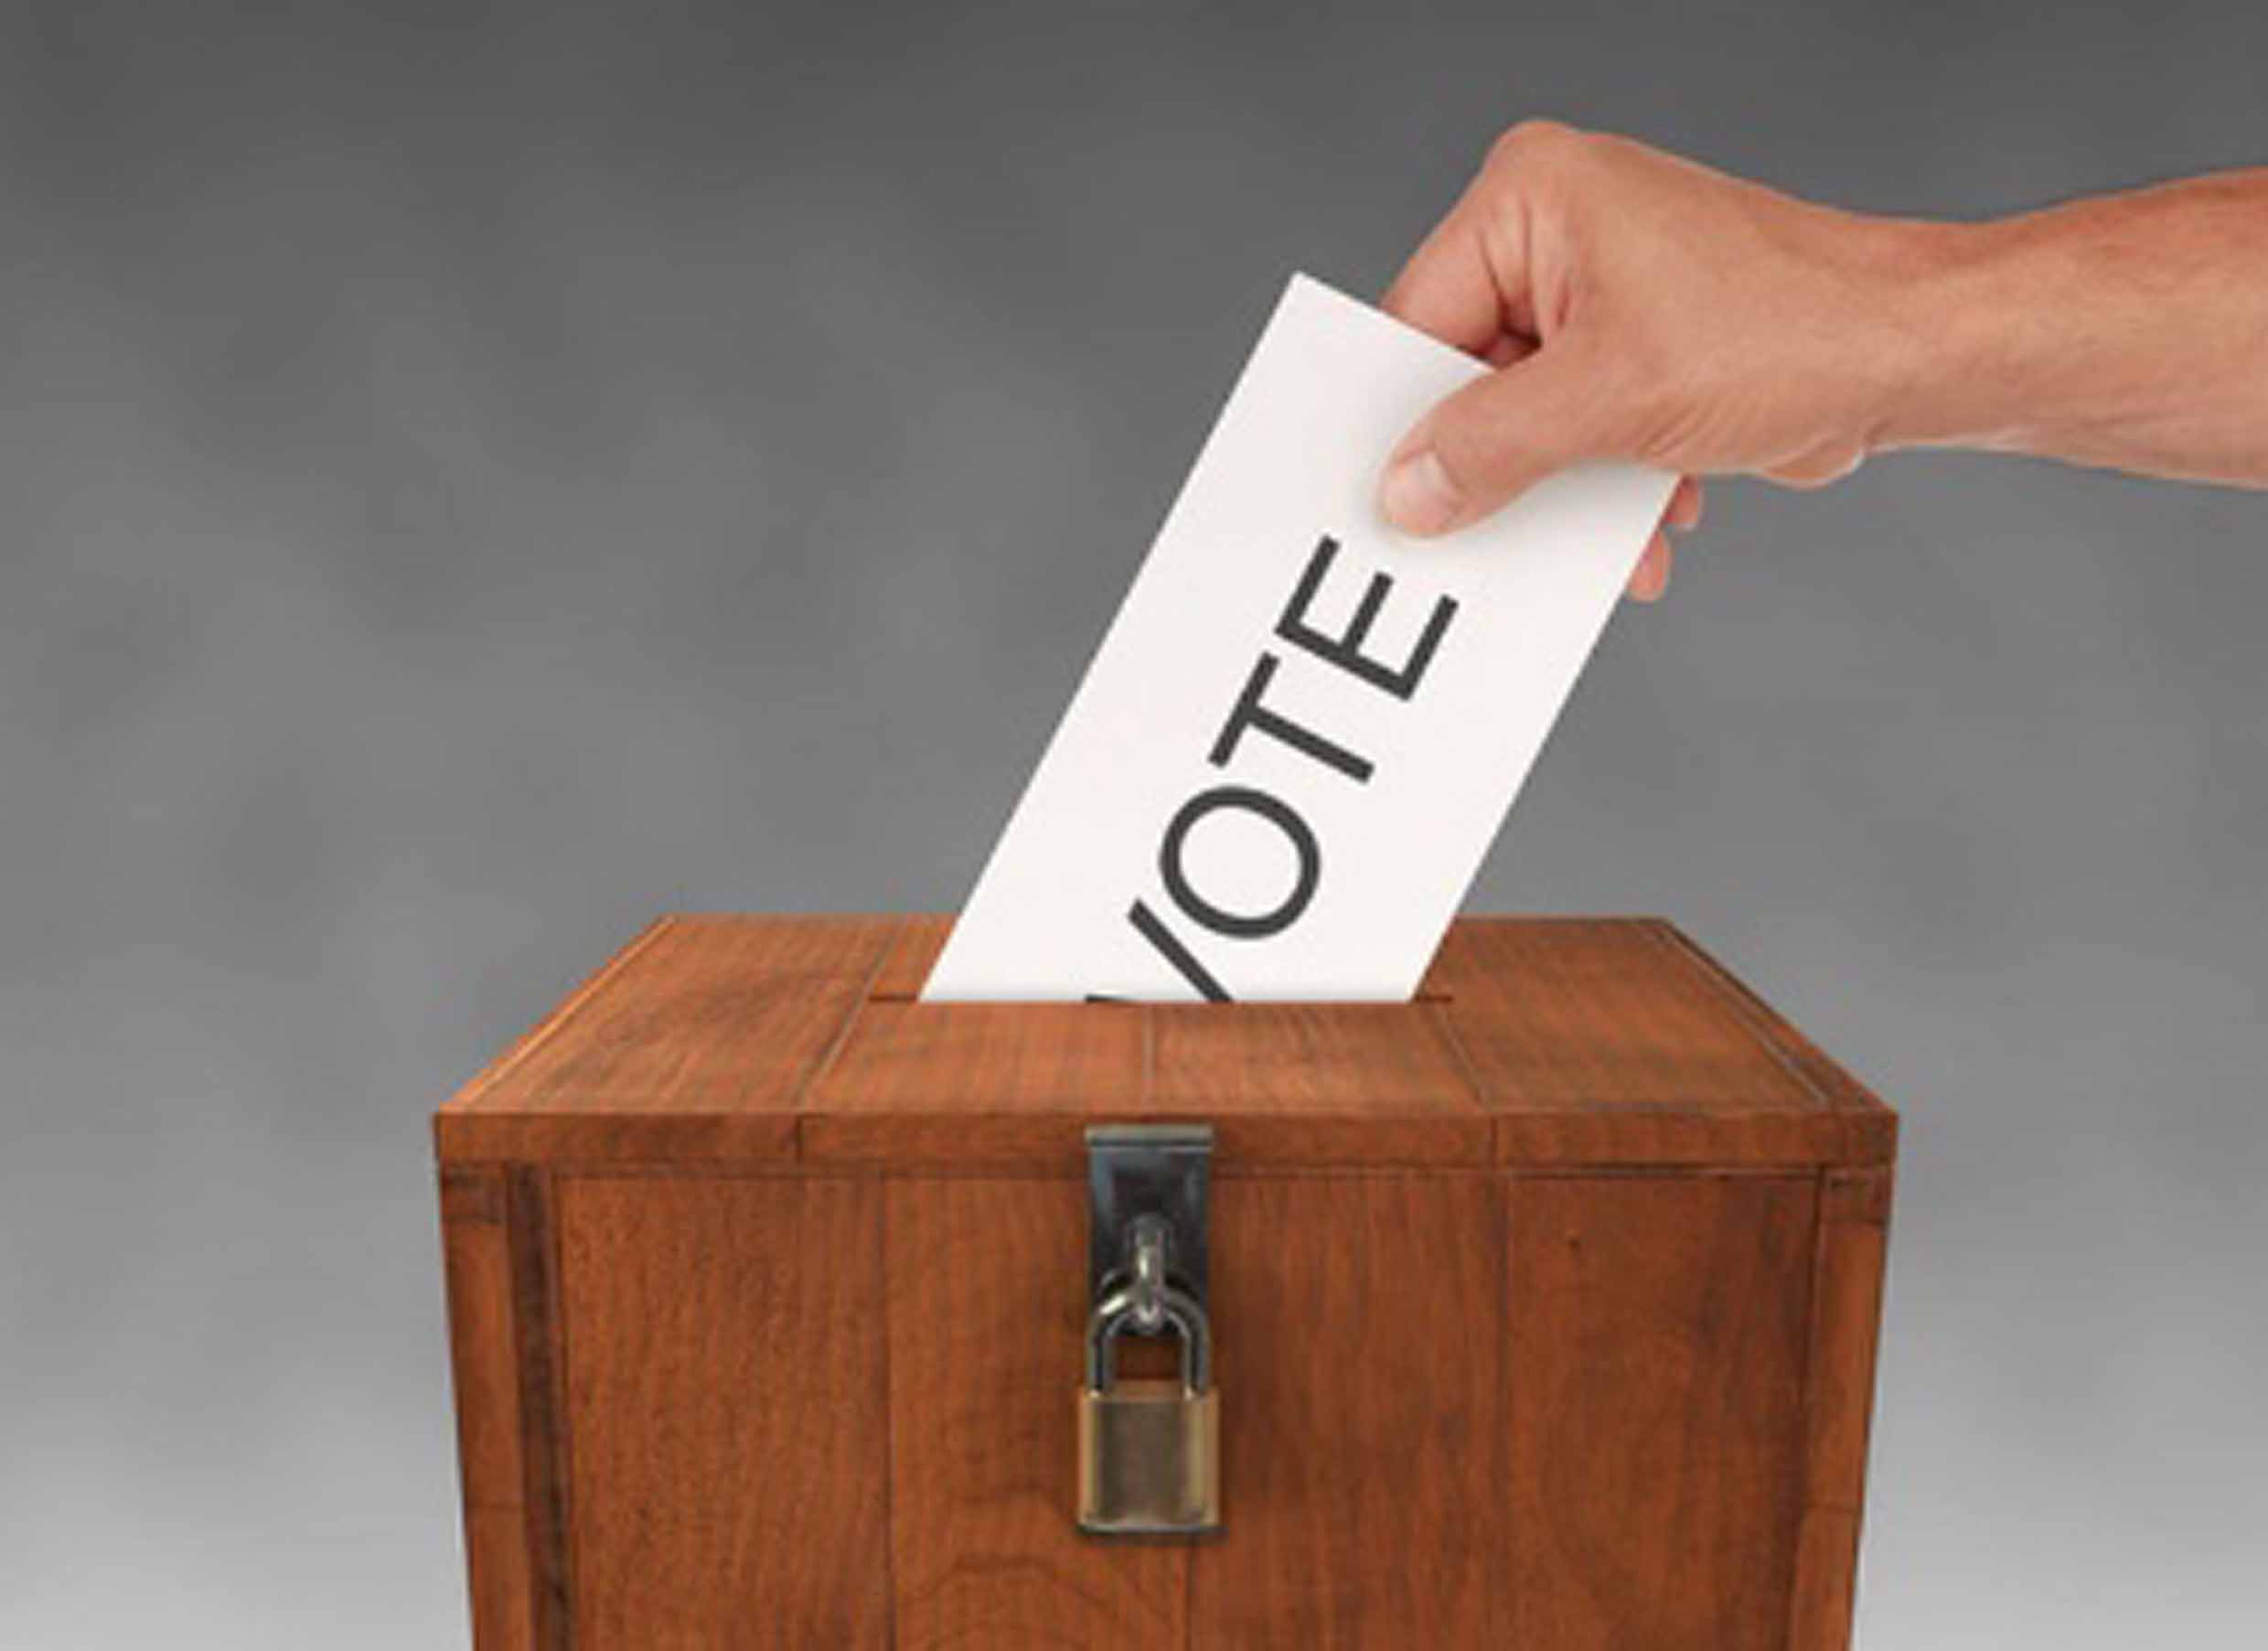 New voting. Vote. Election Box. Vote wz25-30. Голосование картинки для поста.